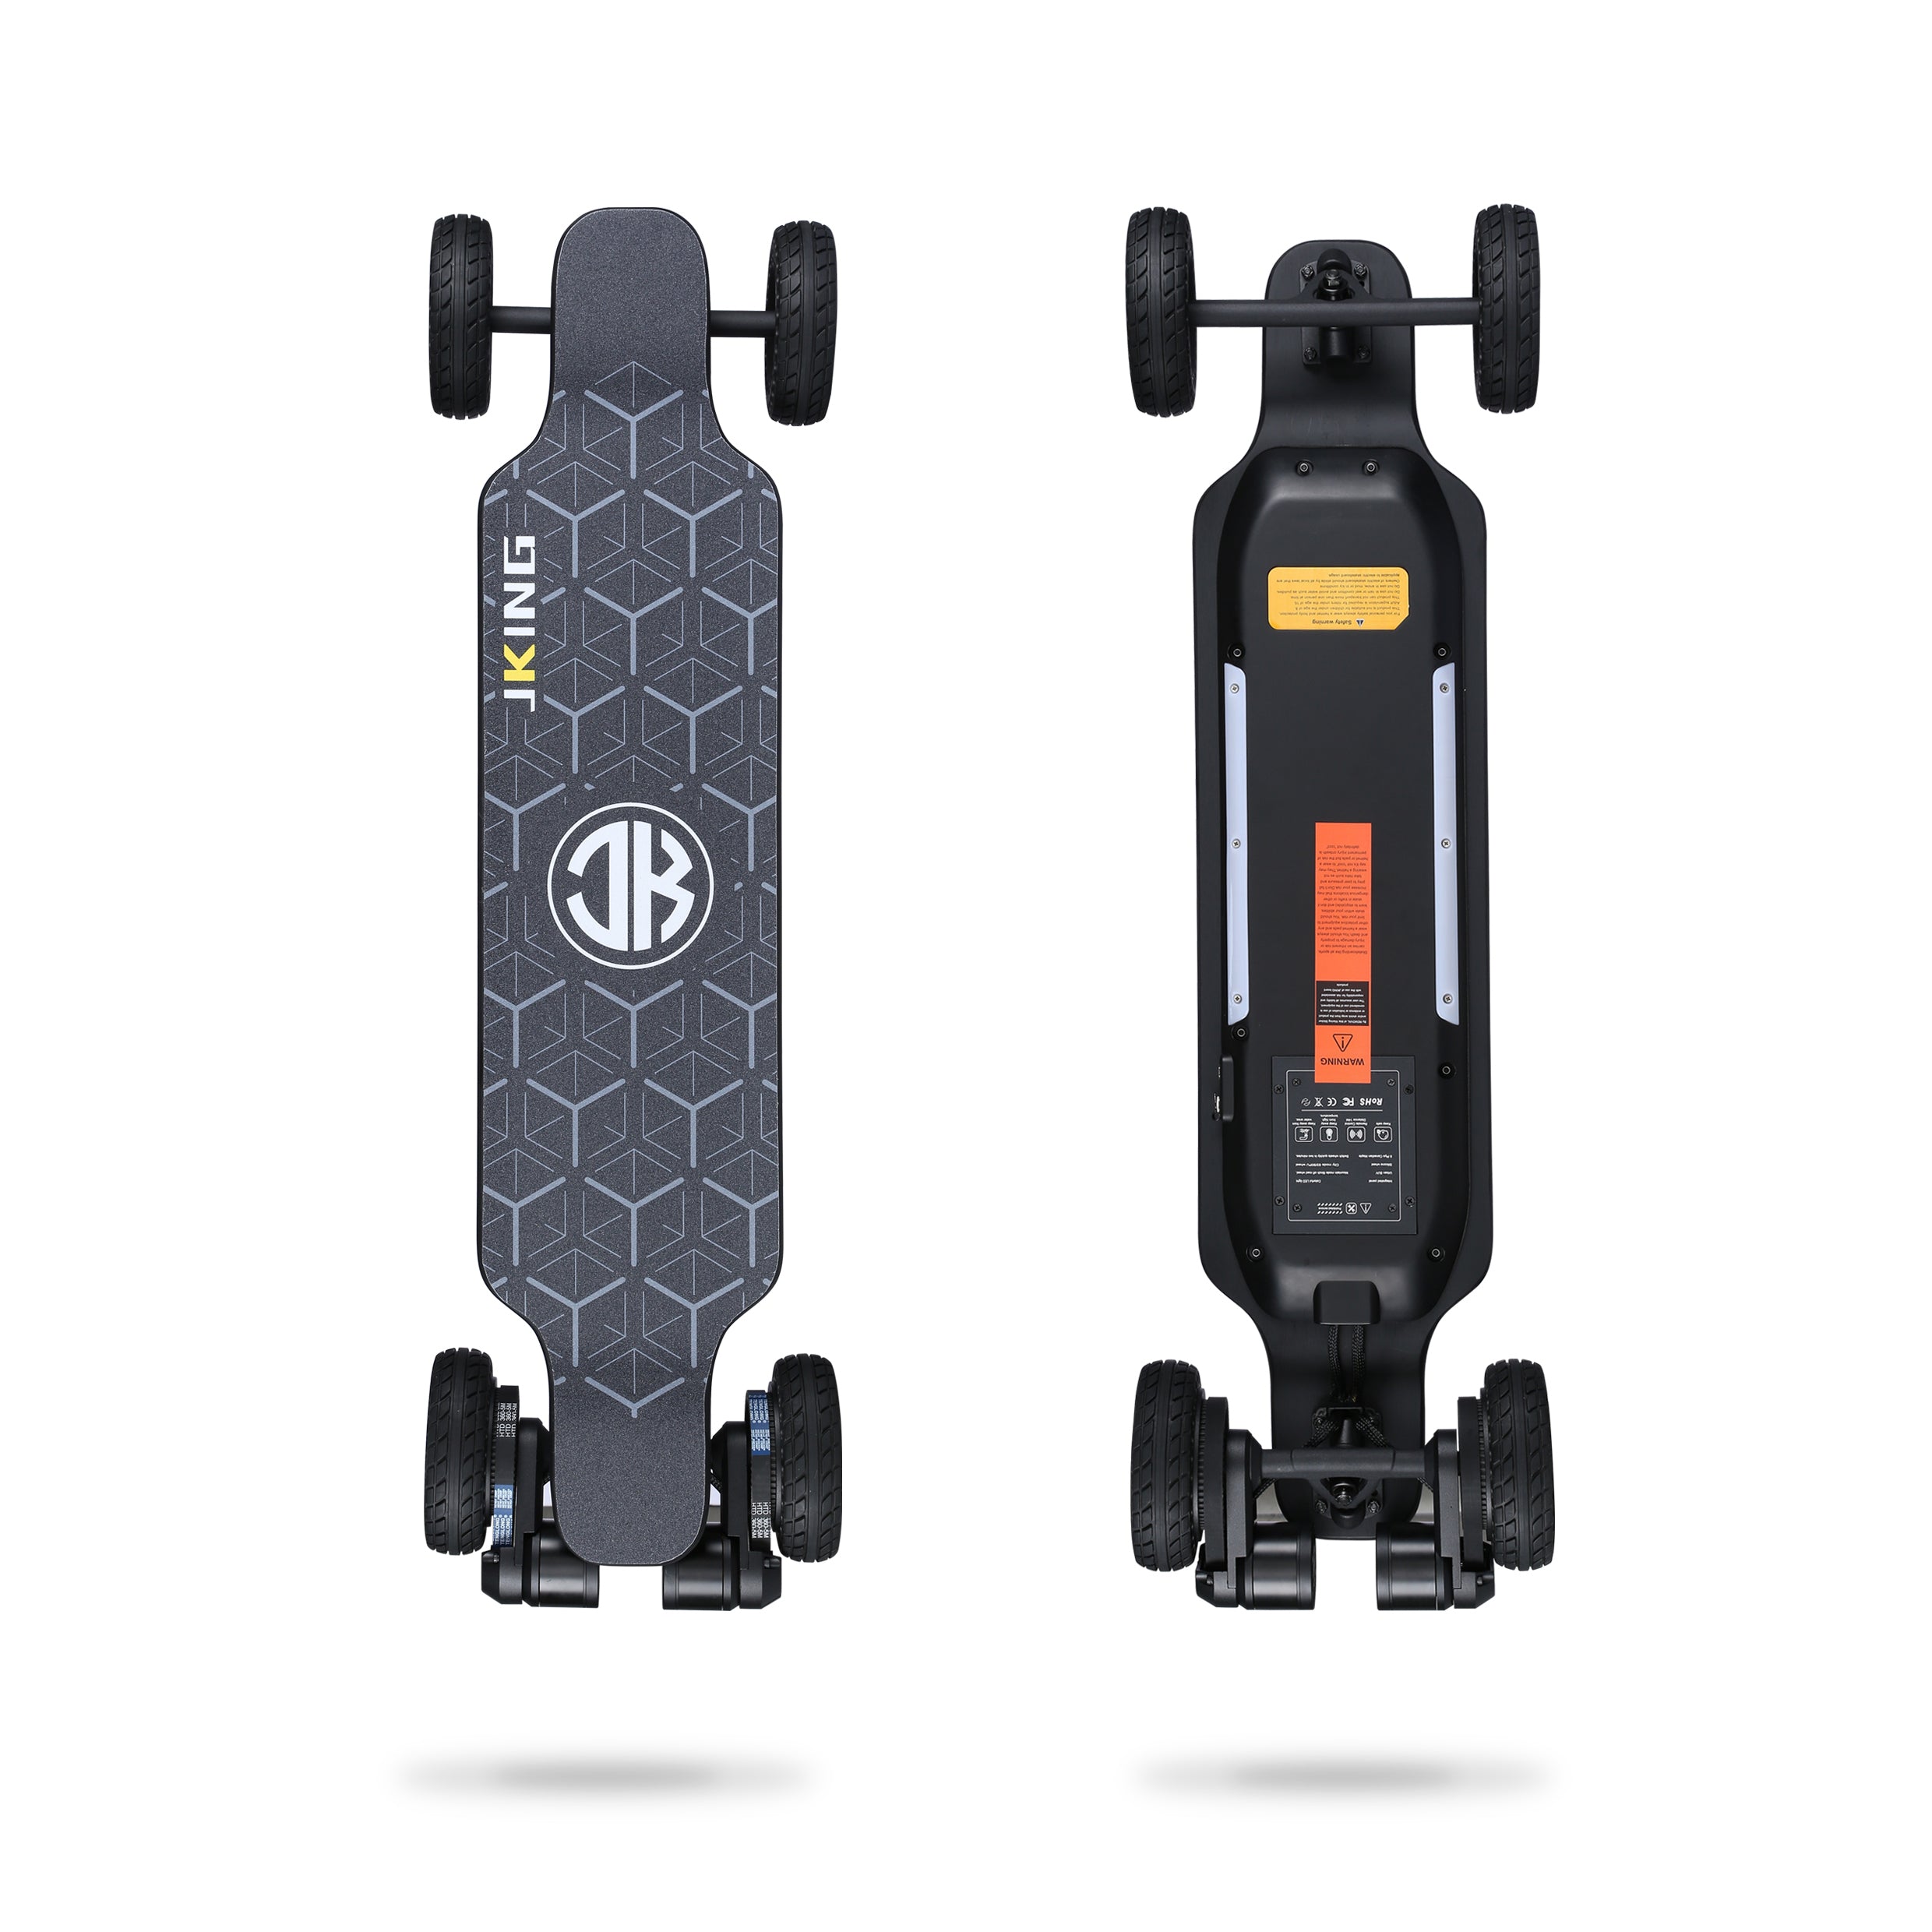 All-terrain Jupiter-01 electric skateboard